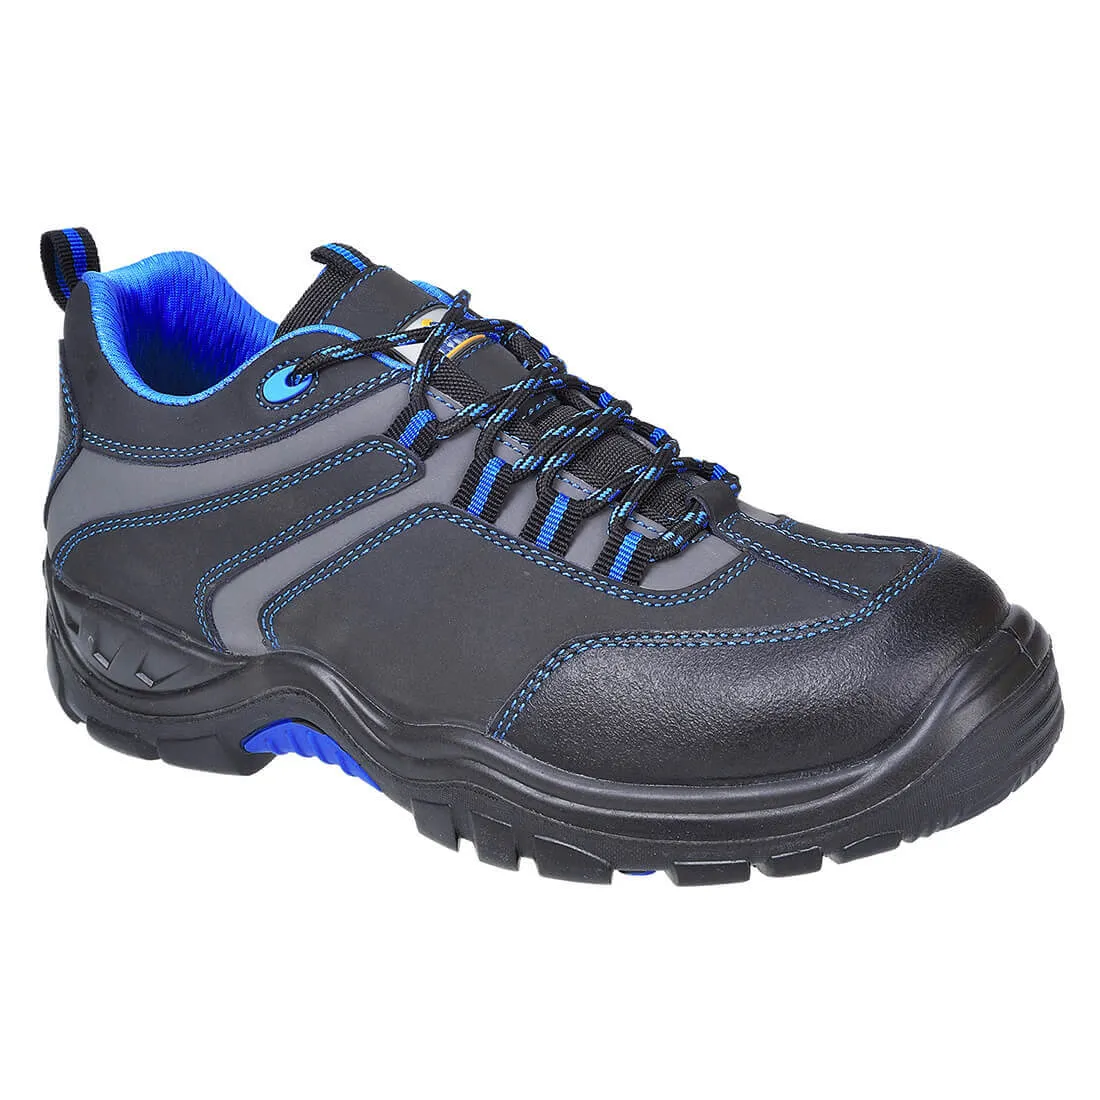 Portwest Ultra Operis S3 Composite Lite Safety Shoe - Blue, Size 10.5